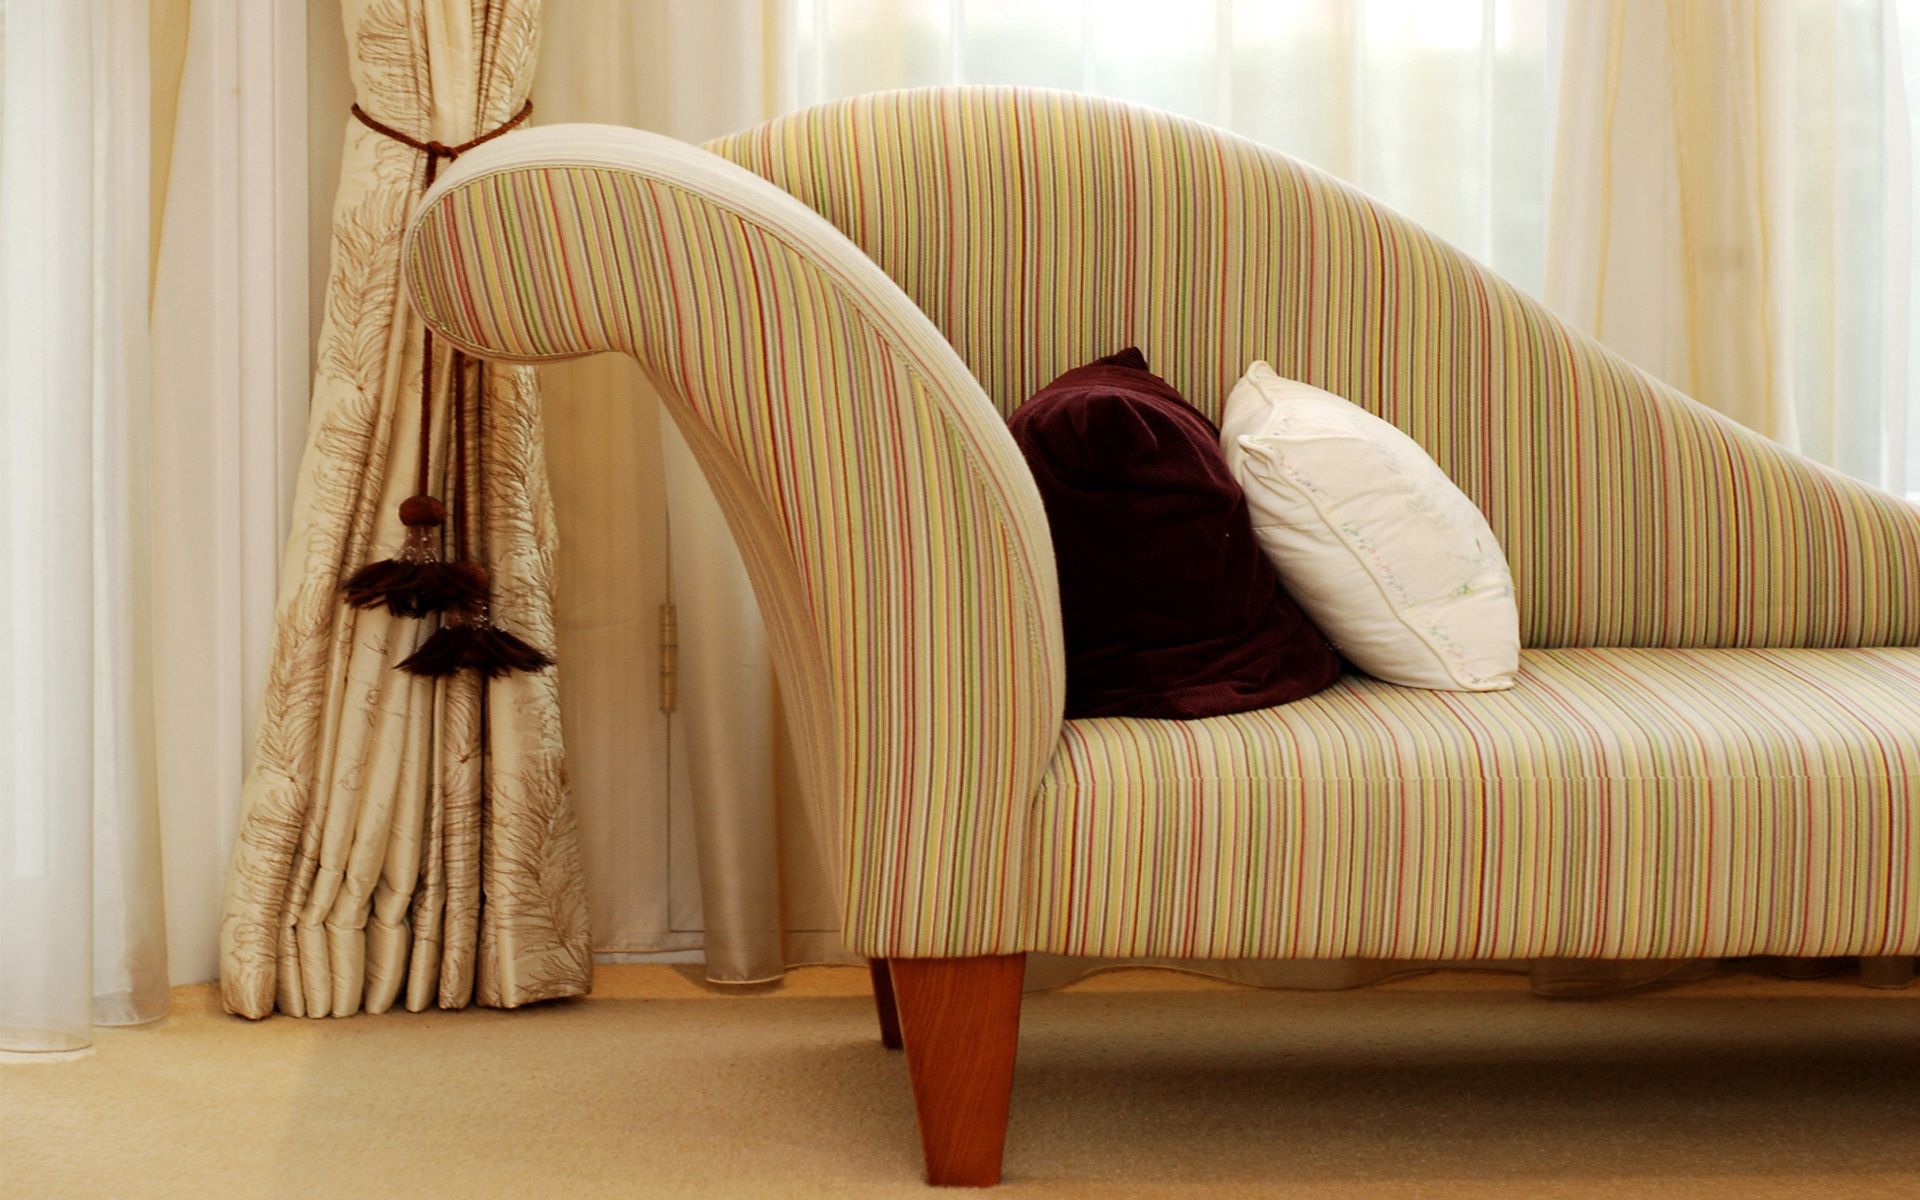 miscellanea, miscellaneous, style, sofa, furniture, cushions, pillows UHD